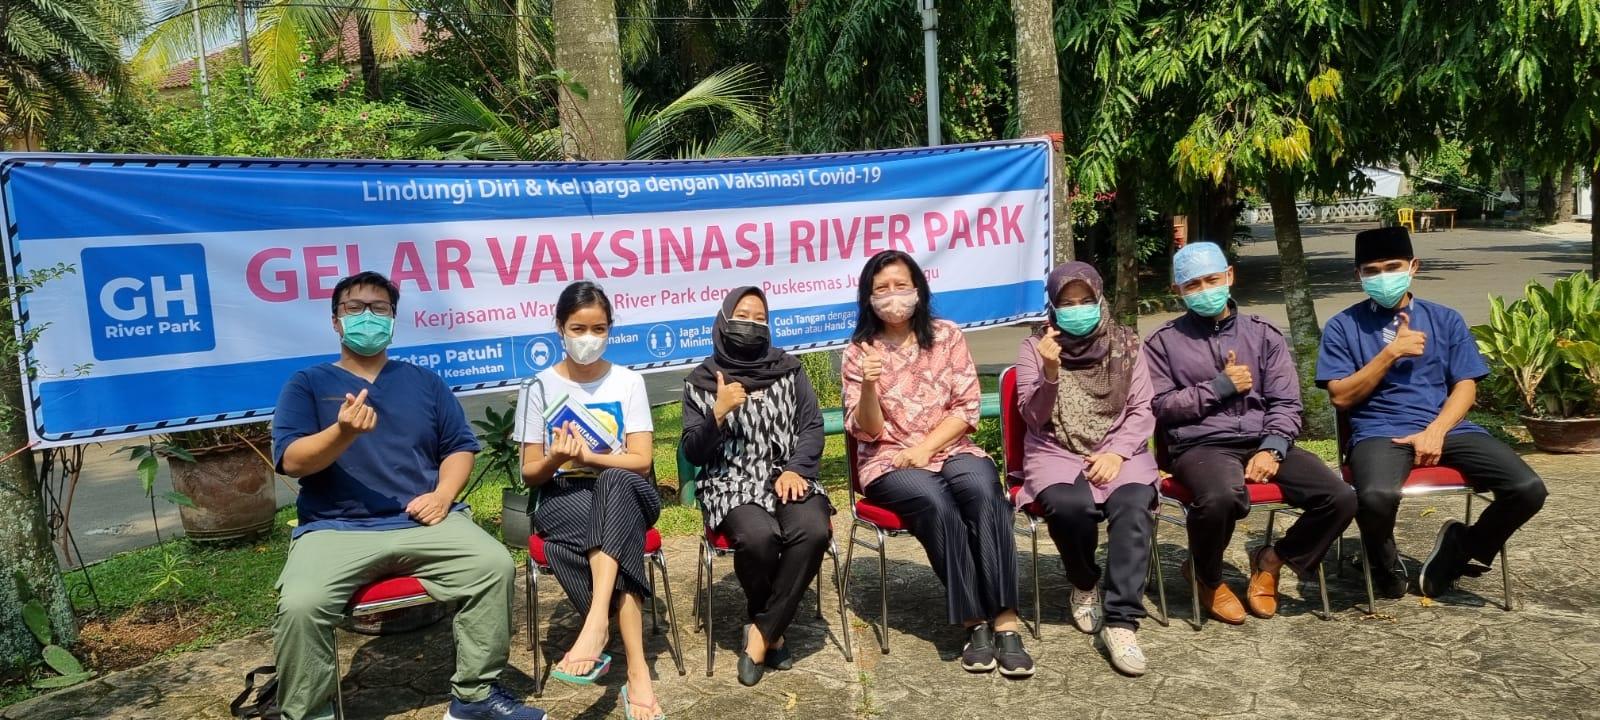 Vaksinasi Covid-19 di River Park Bintaro